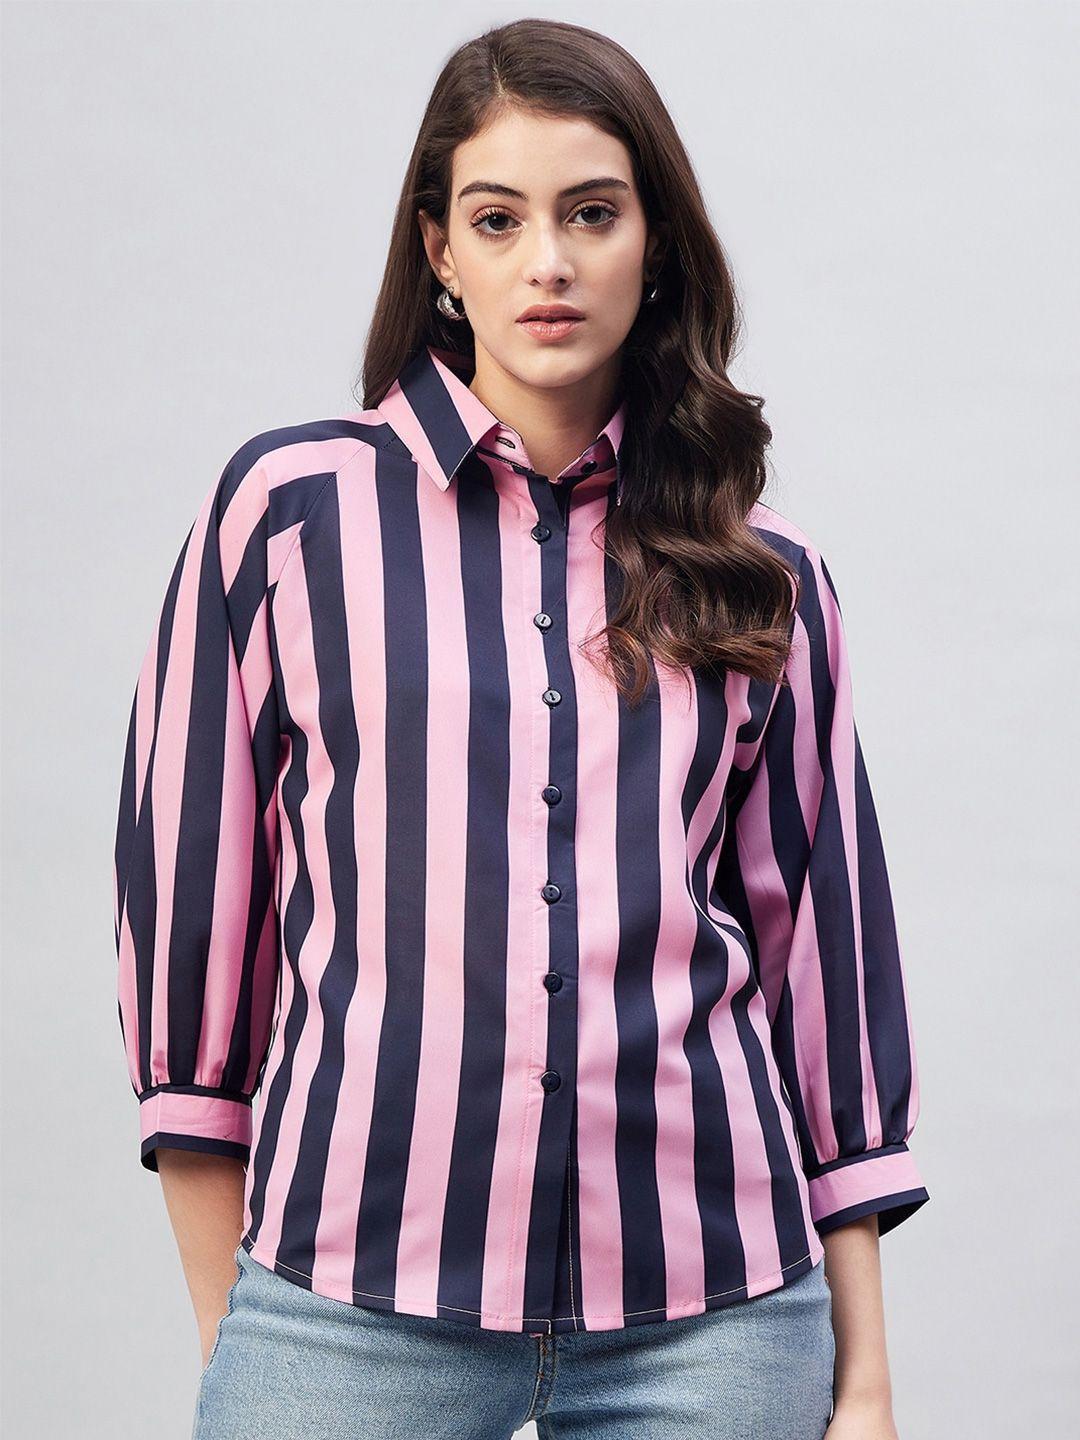 carlton london women striped casual shirt